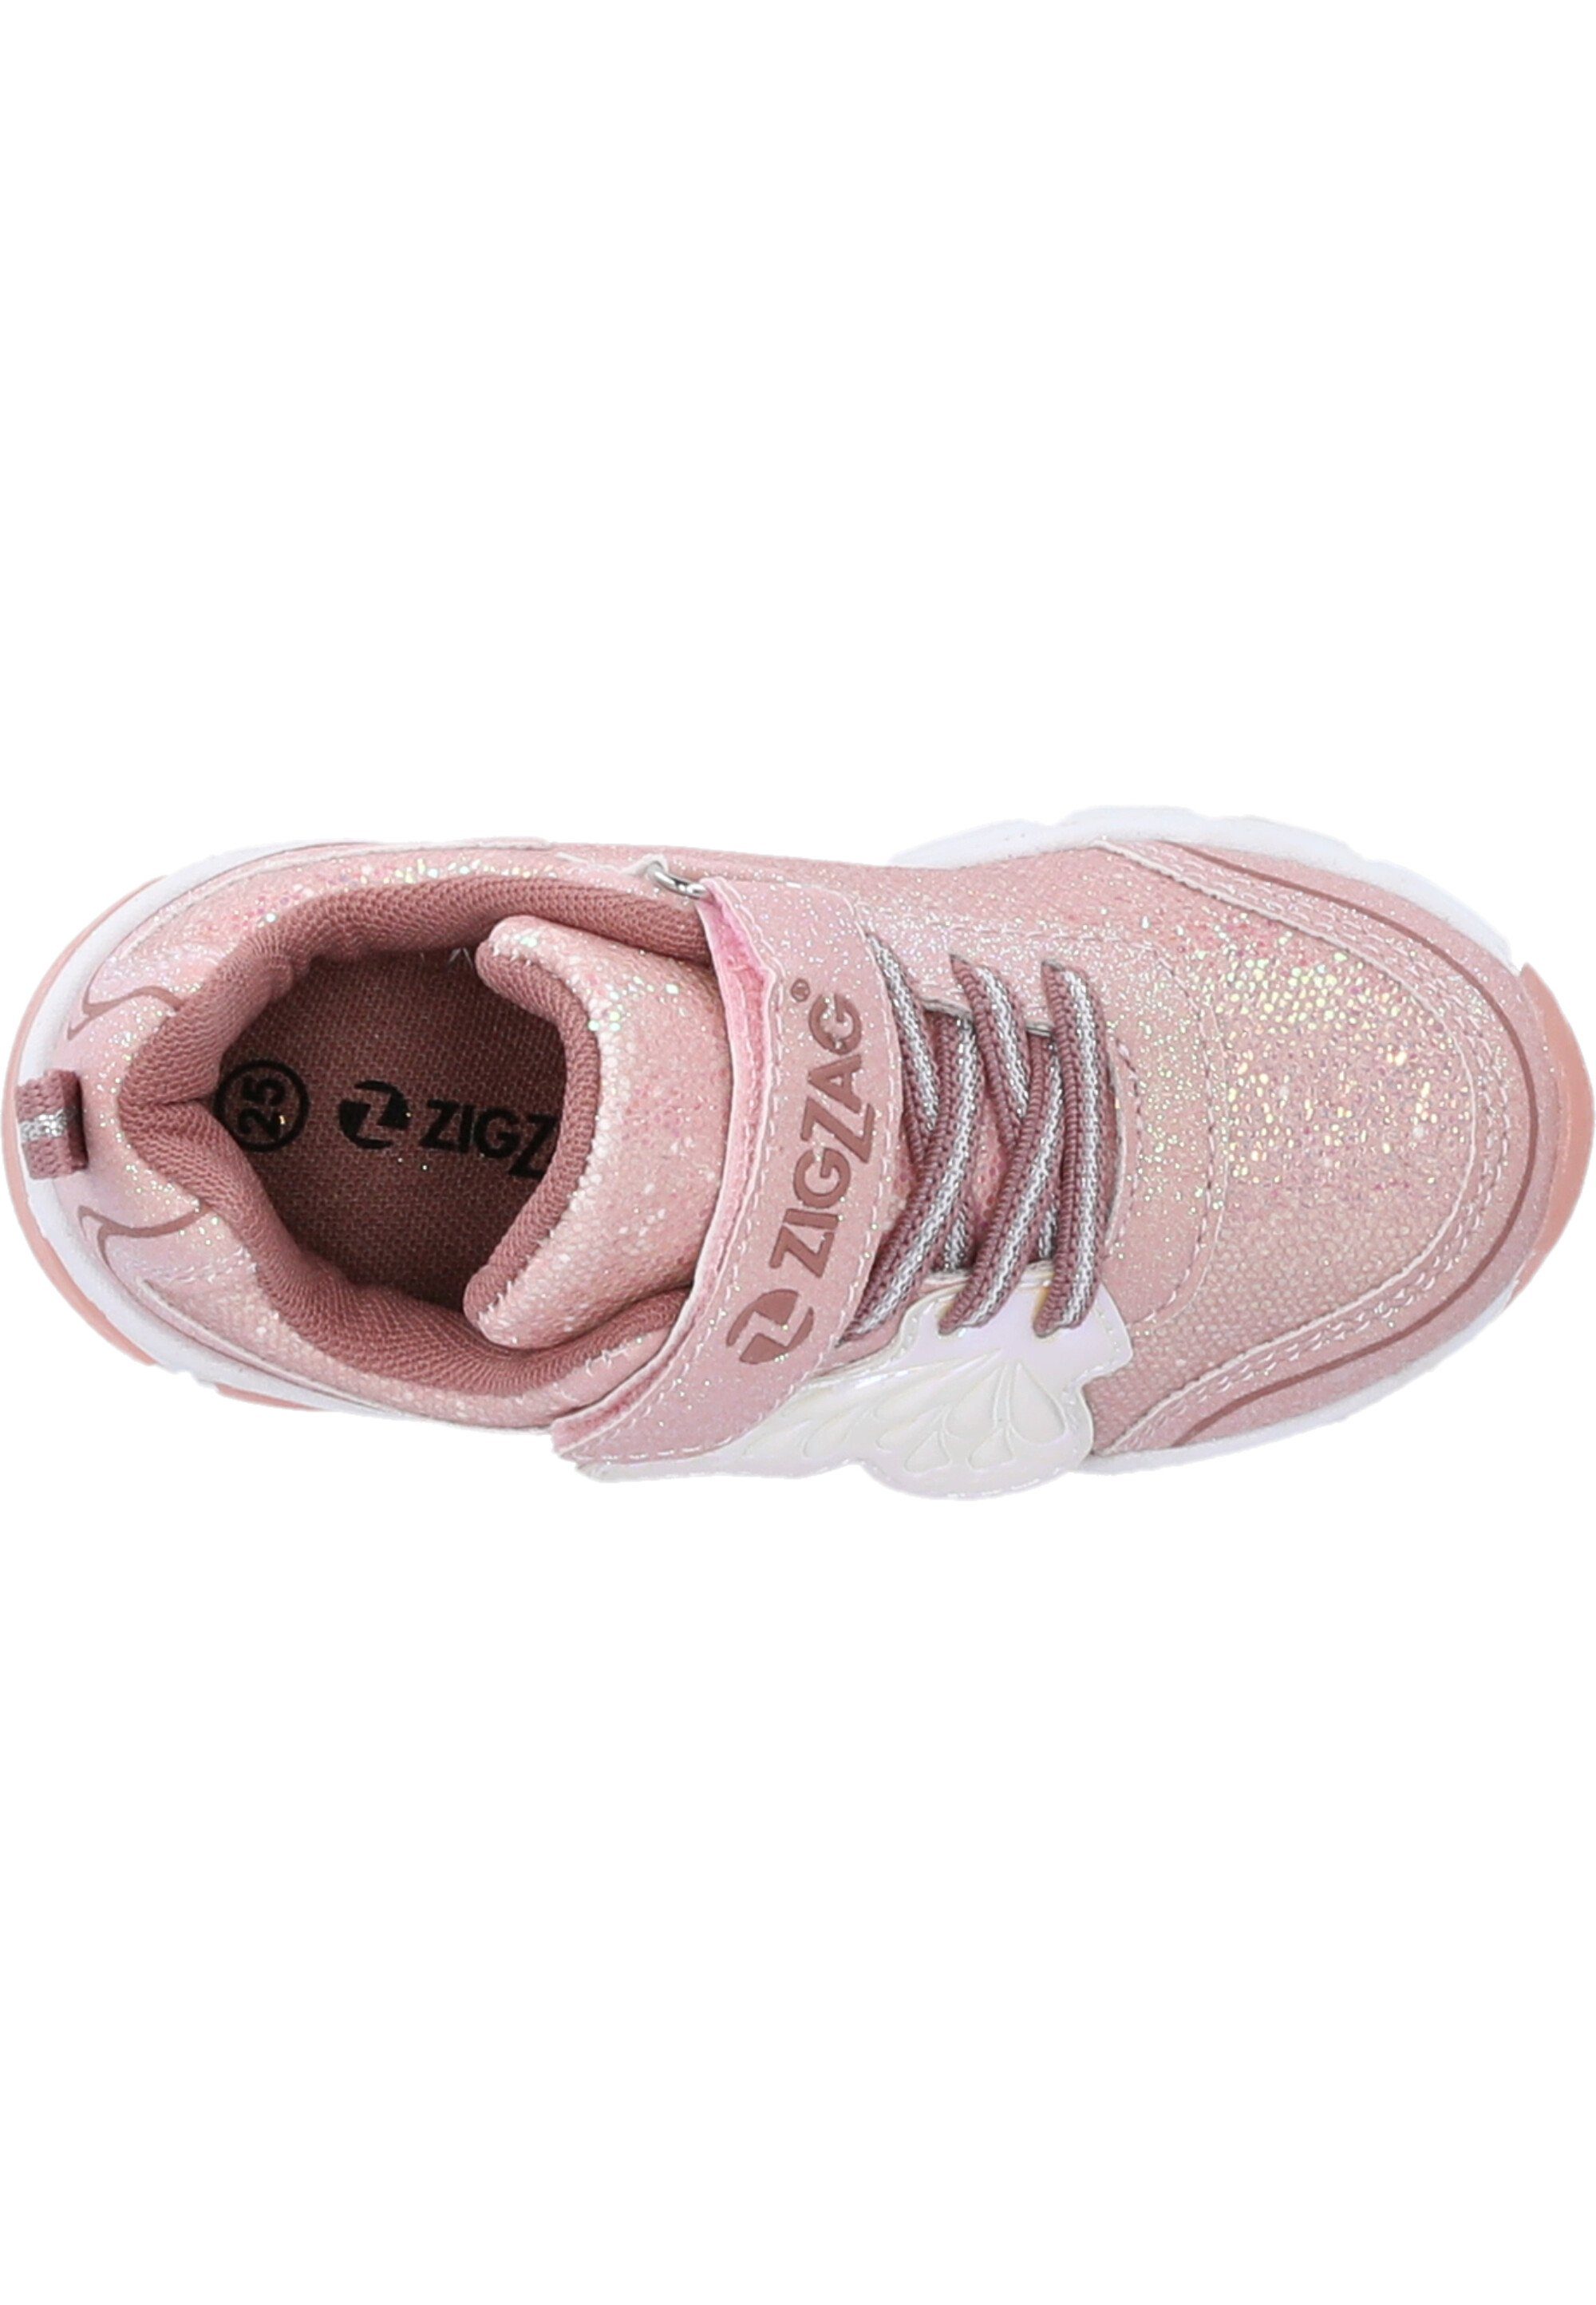 ZIGZAG Auhen Sneaker im trendigen rosa Glitzer-Design